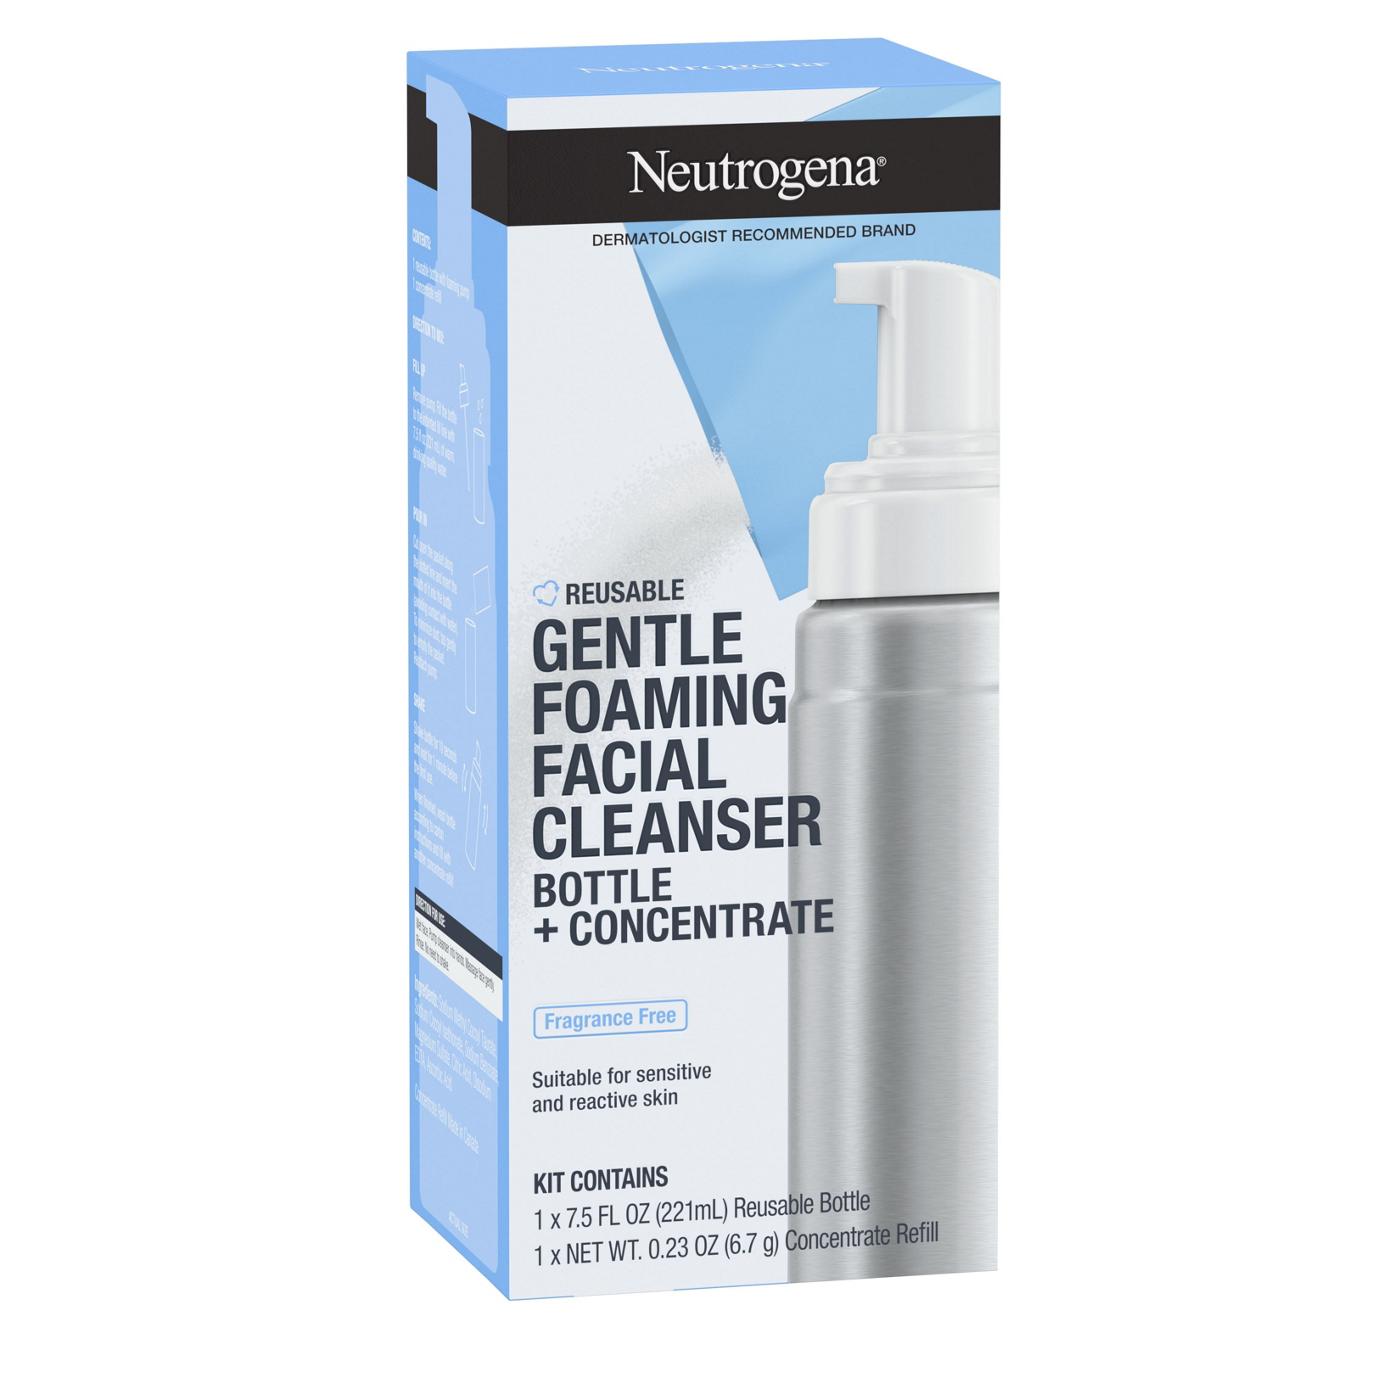 Neutrogena Reusable Gentle Foaming Facial Cleanser; image 1 of 2